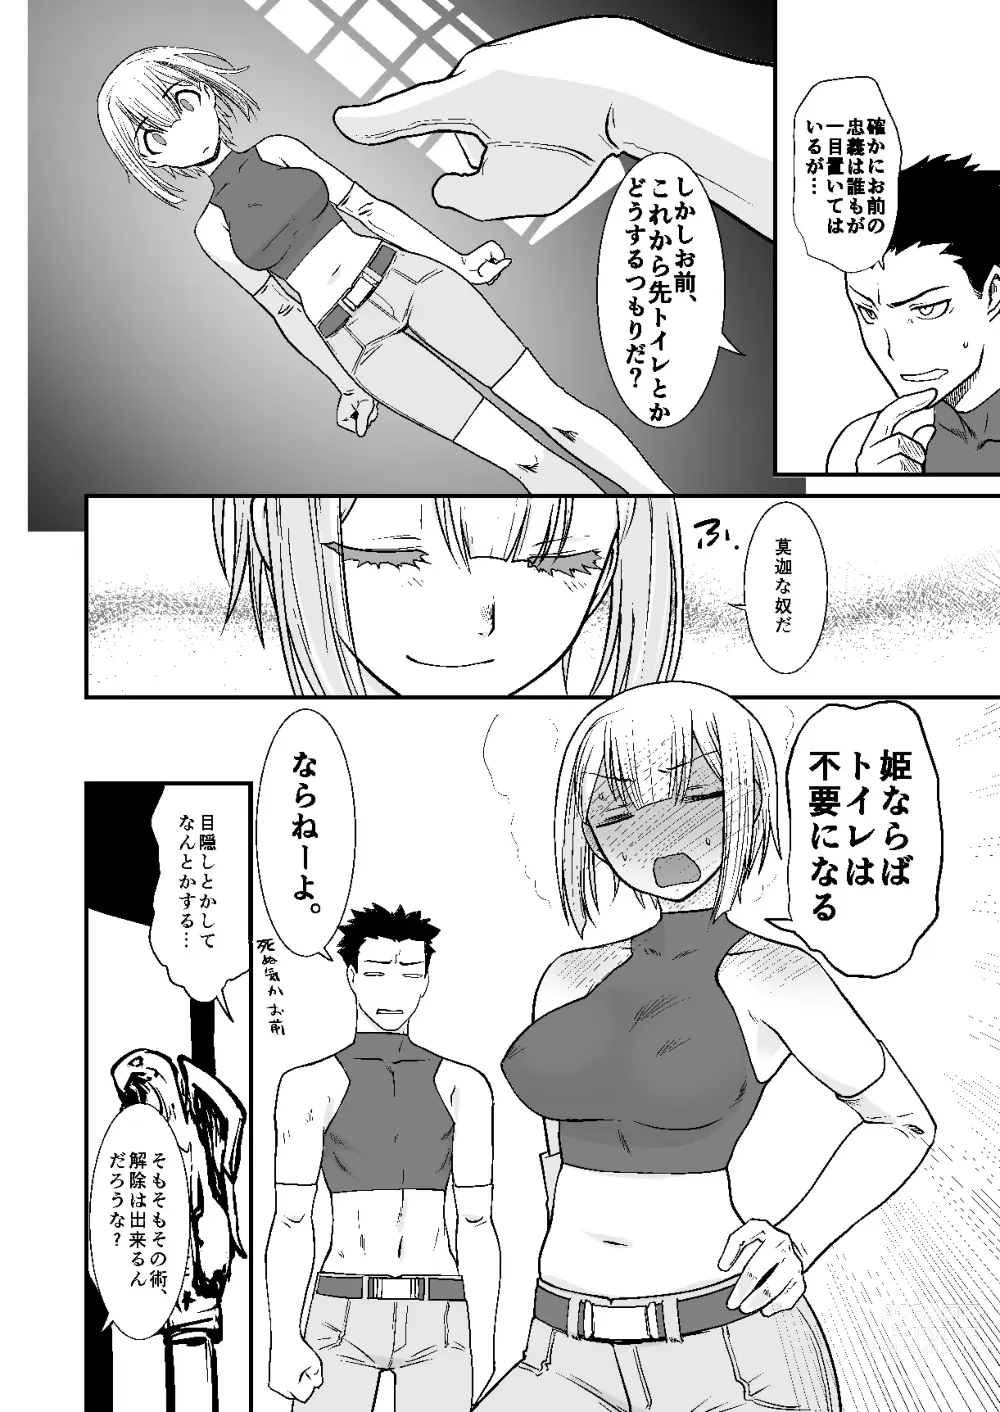 Page 6 of doujinshi 騎士団長シリーズ総集編